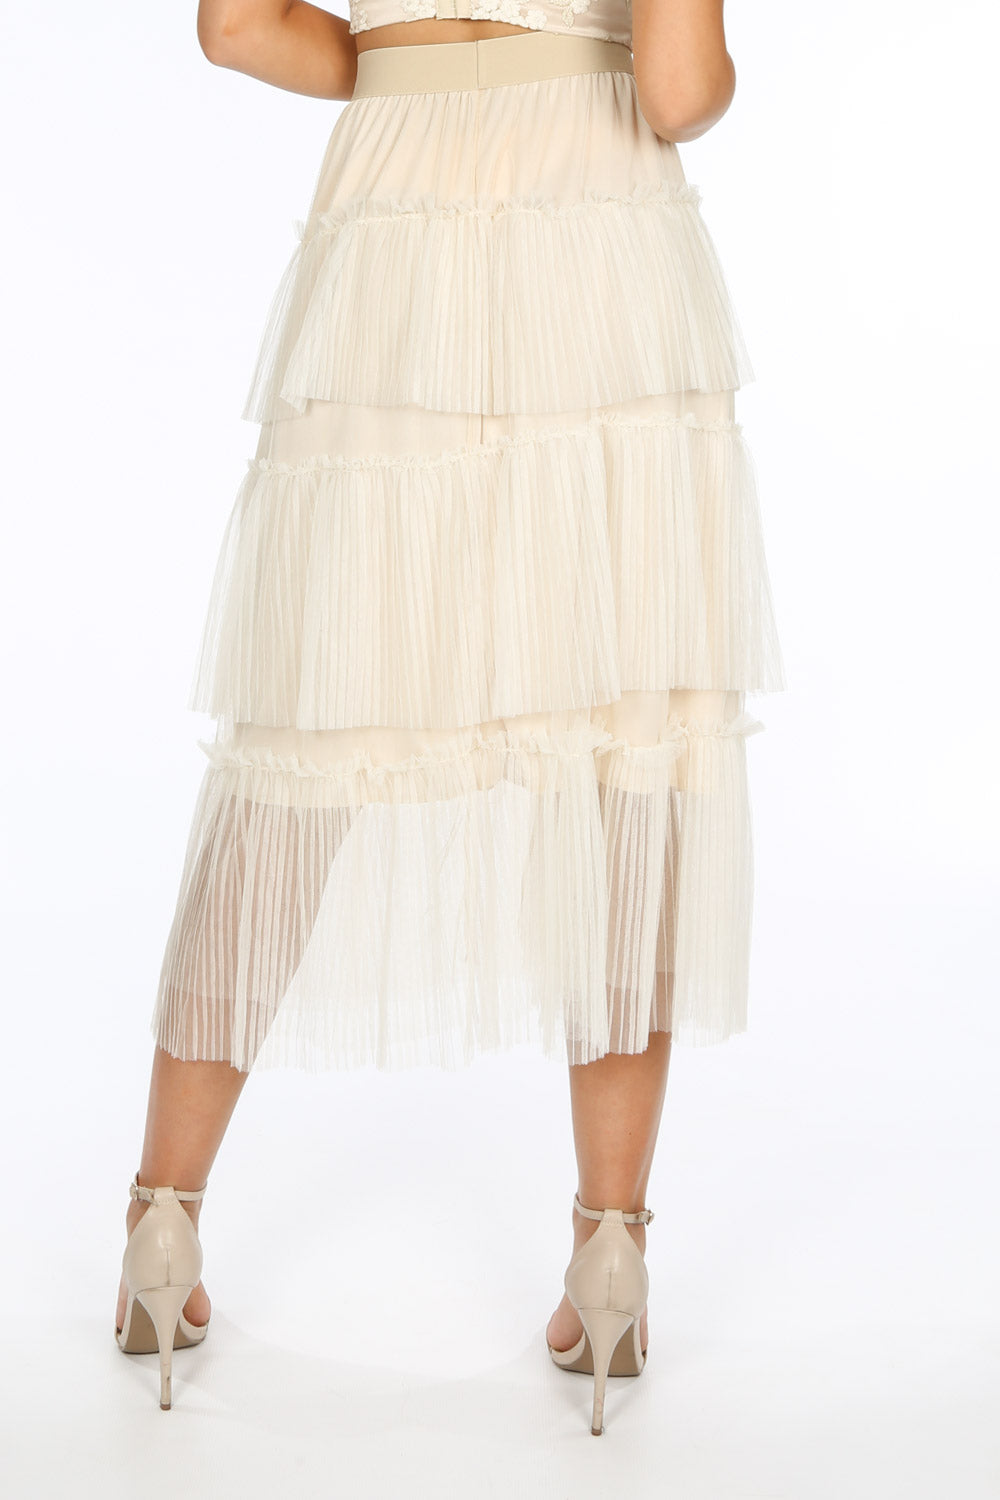 Cream Layered Tulle Midi Skirt